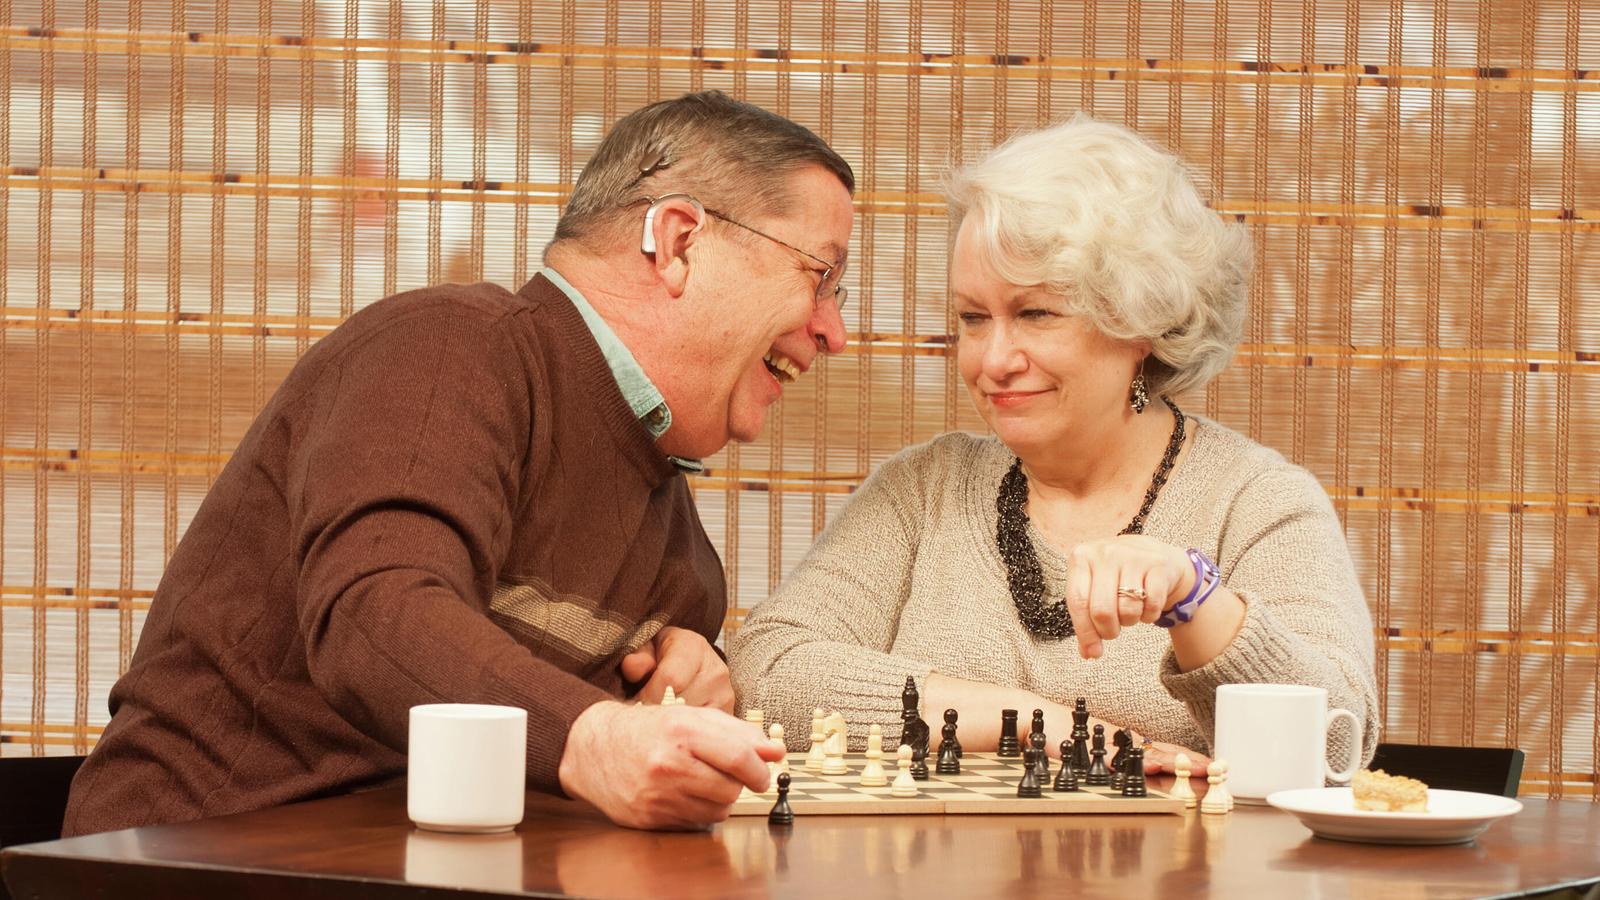 Pacientul Bill și soţia sa, Pam, distrându-se jucând șah